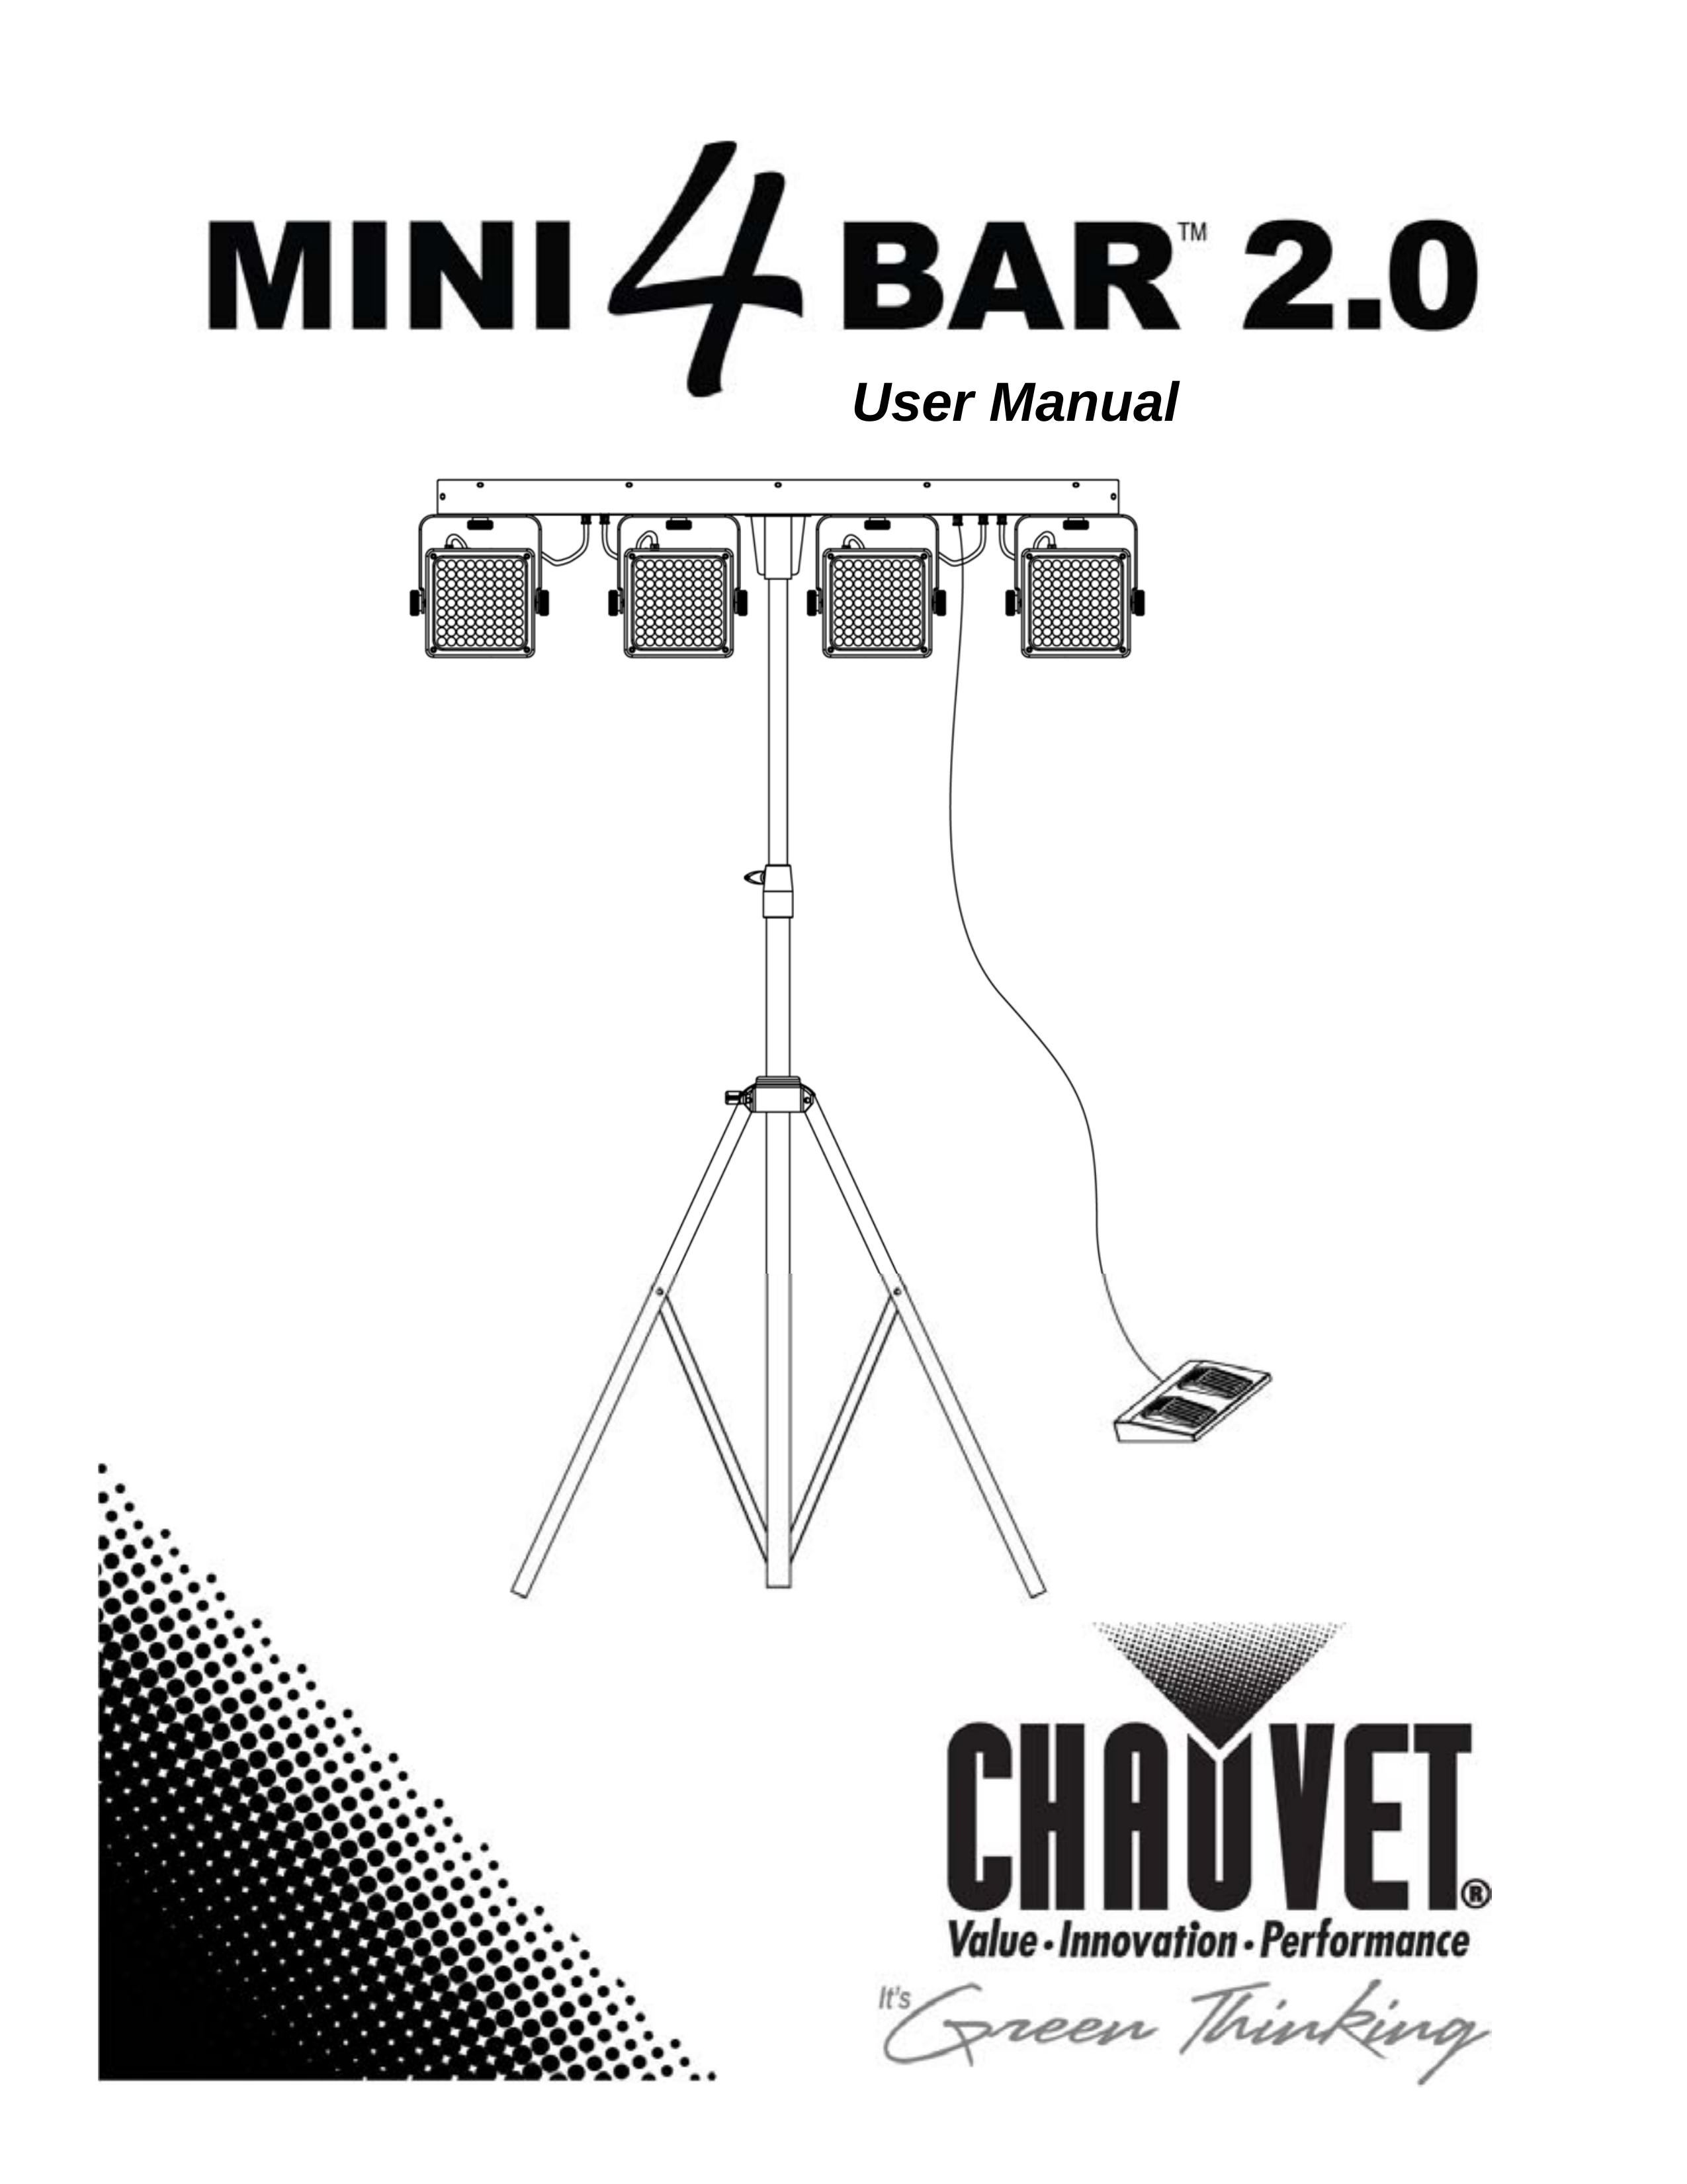 Chauvet MINI 4 BAR 2.0 Landscape Lighting User Manual